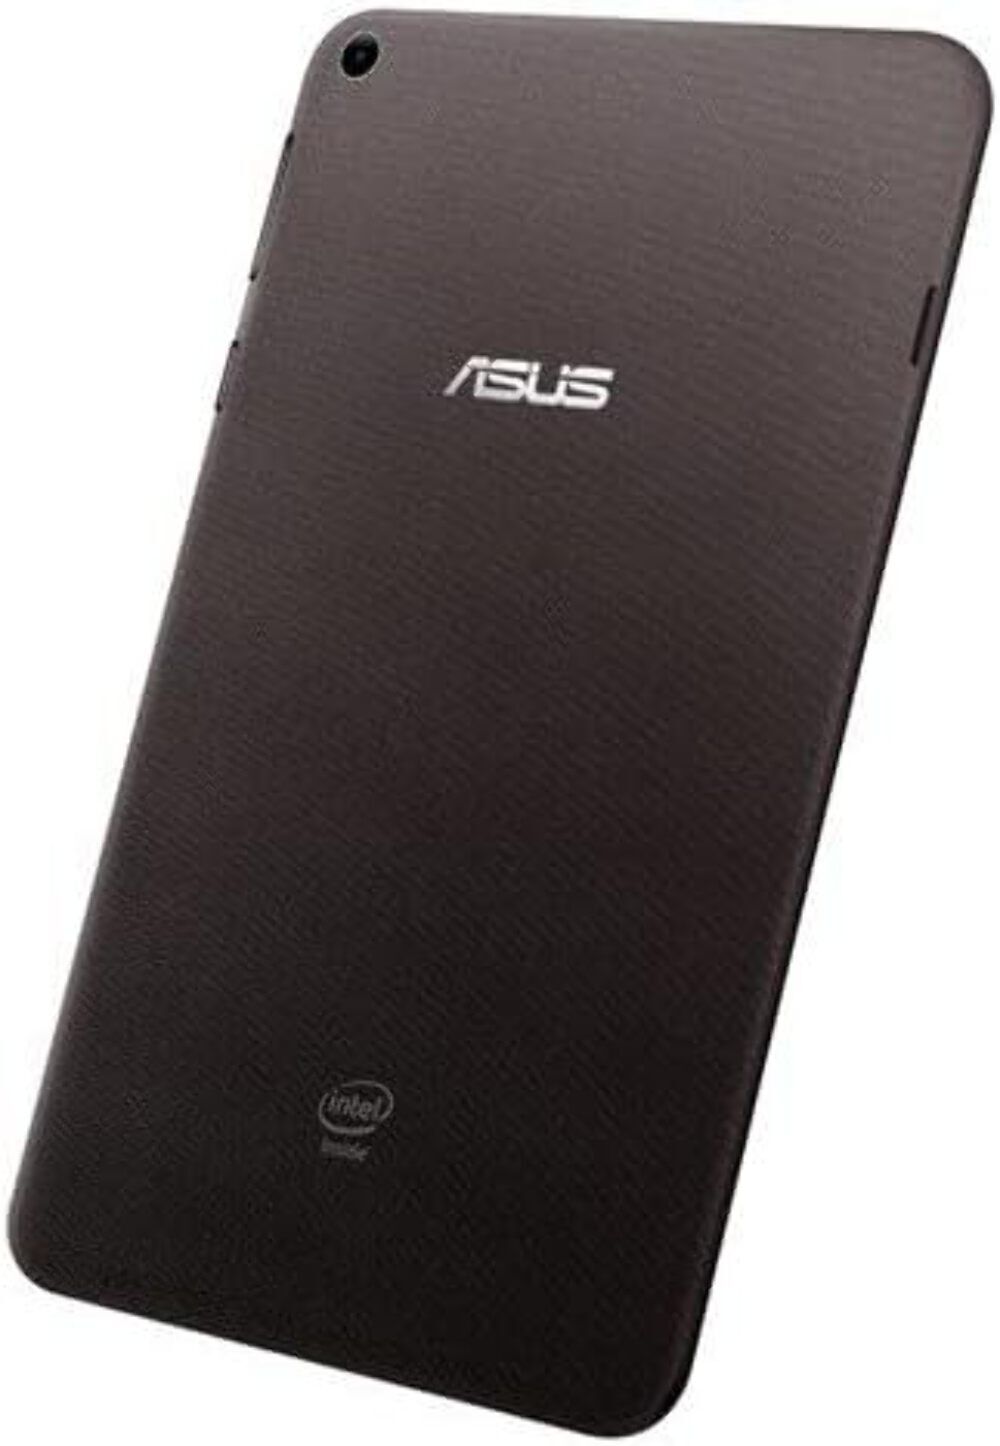 Asus Memo Pad 8 Tablet, Android, 7", Wi-Fi, 16GB, Black